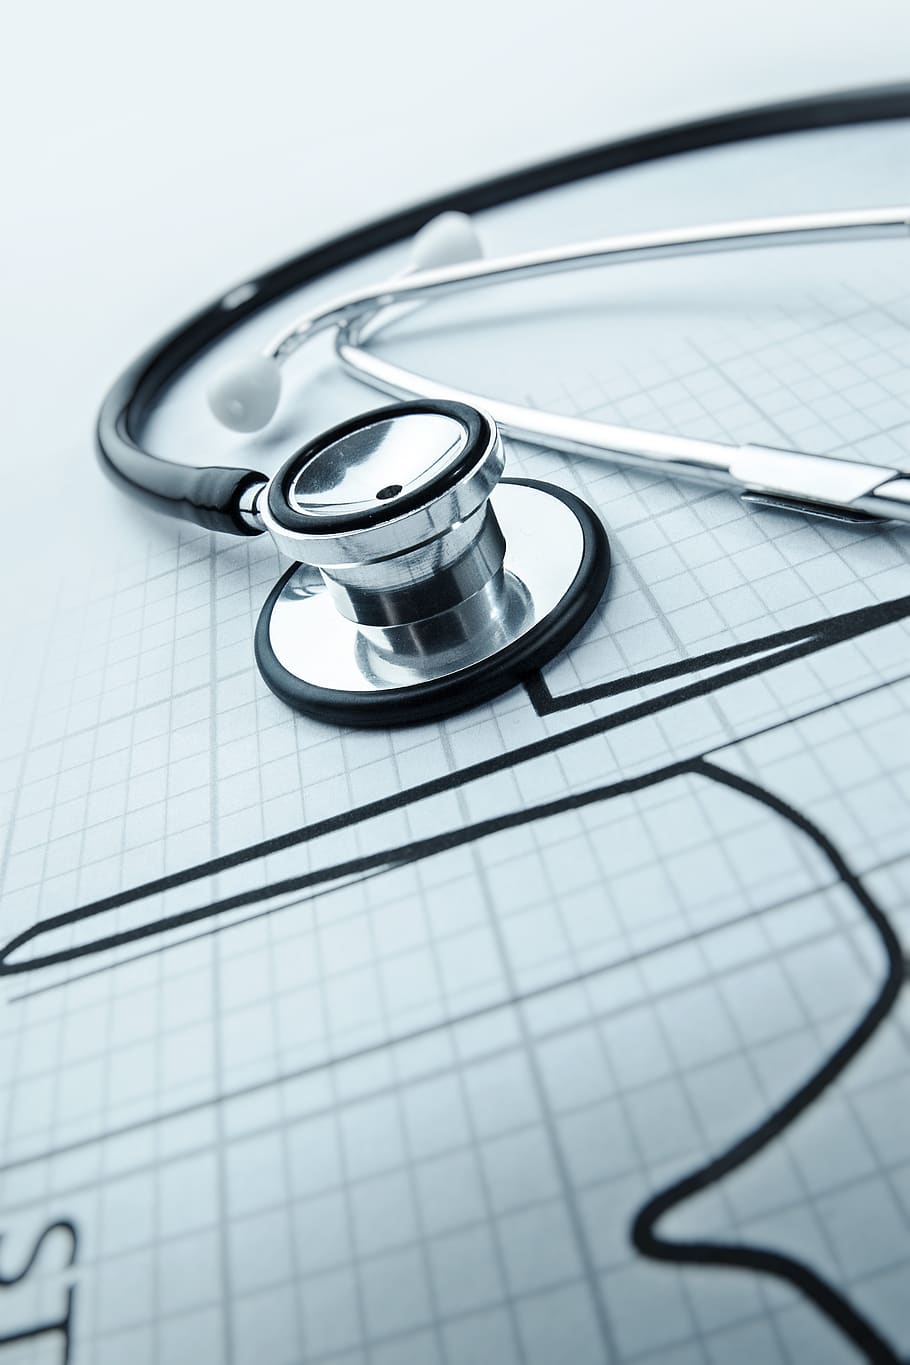 HD wallpaper: health, stethoscope, heart, hospital, medical, electro, ekg